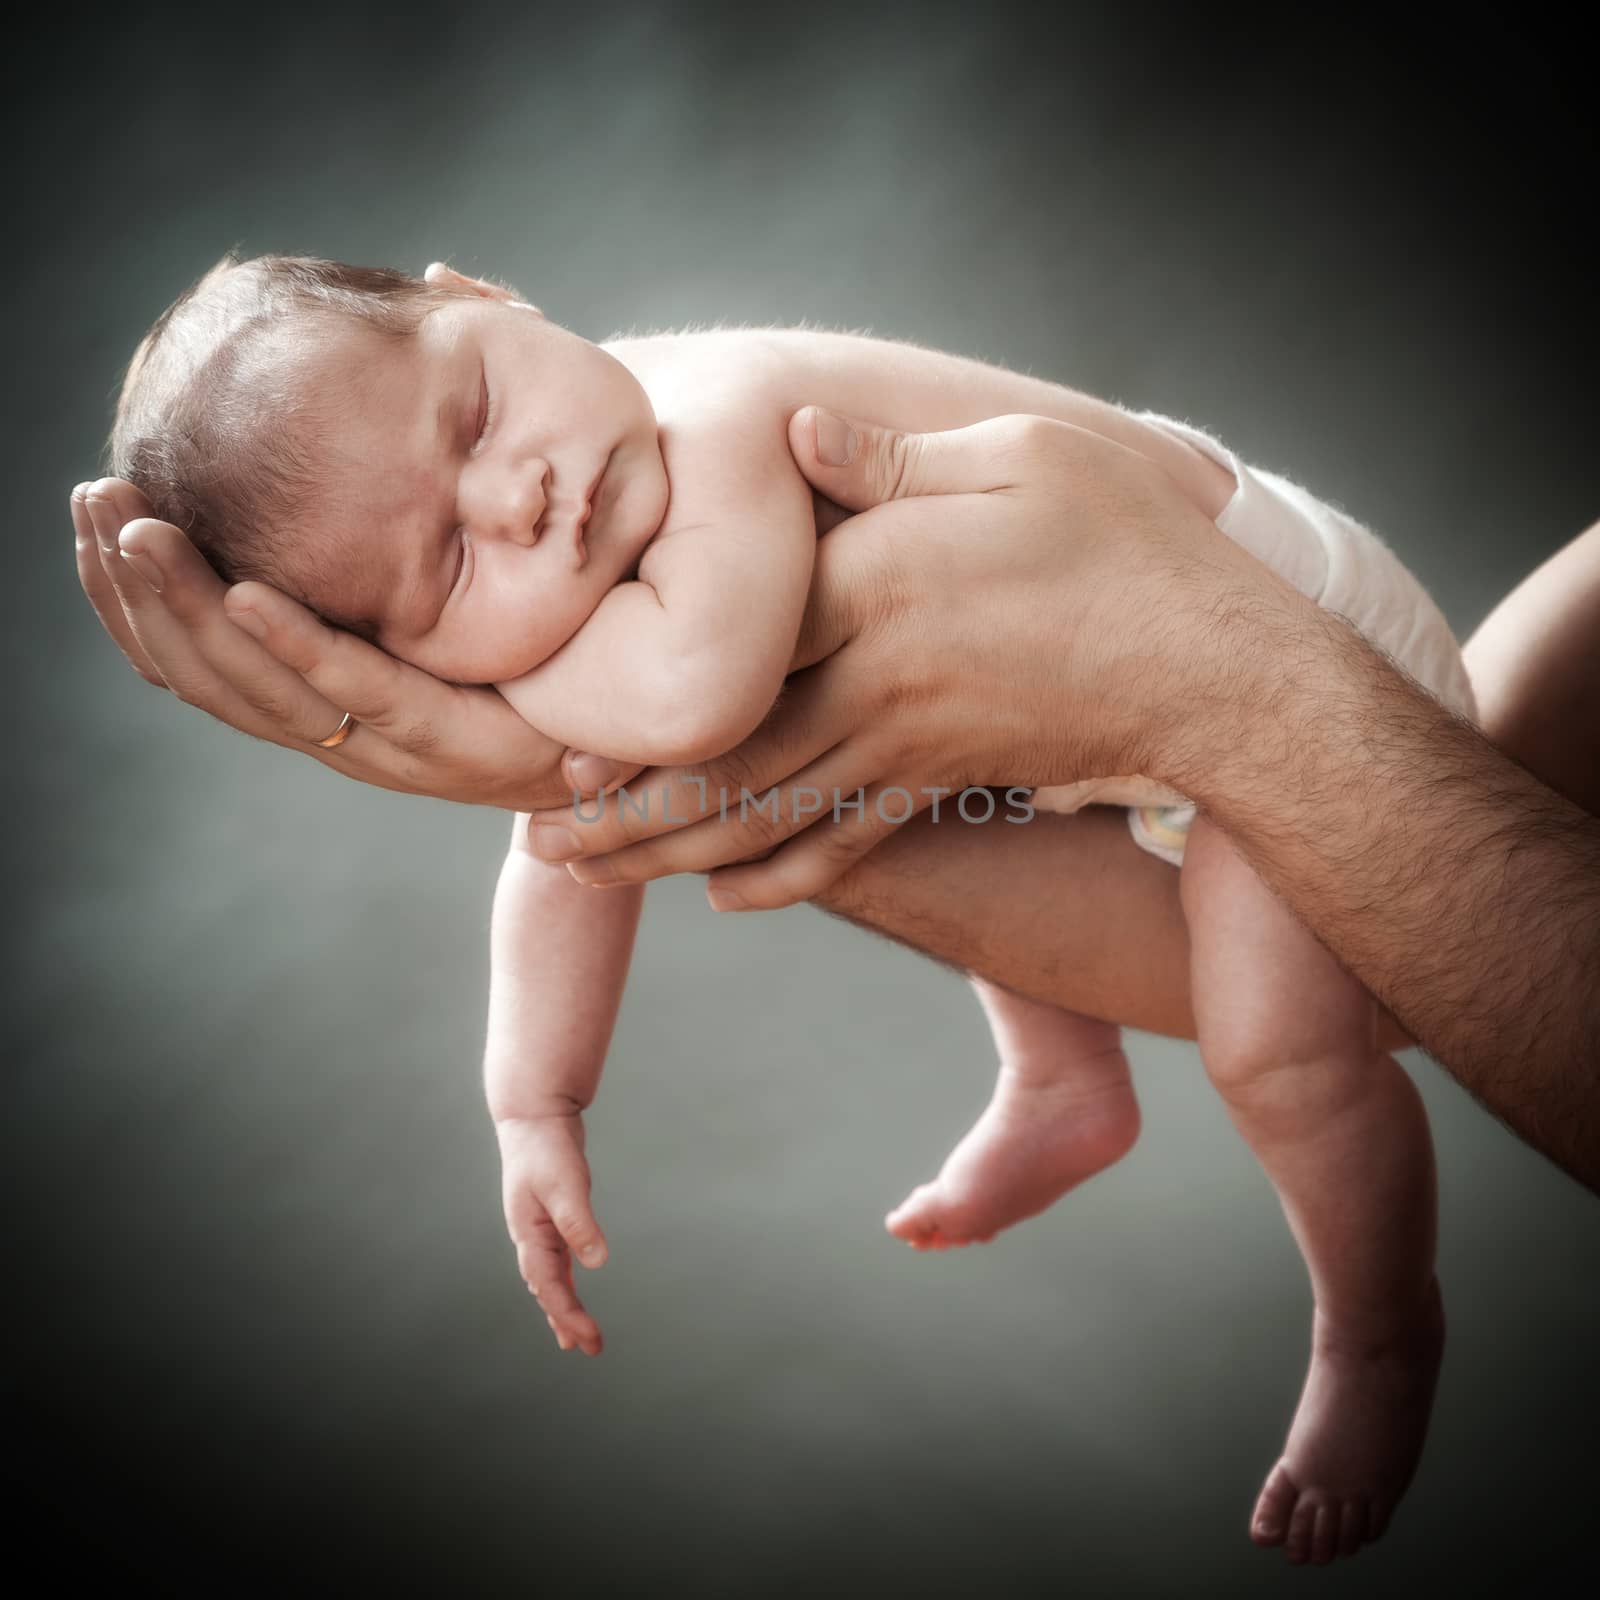 the newborn child on hands by sveter